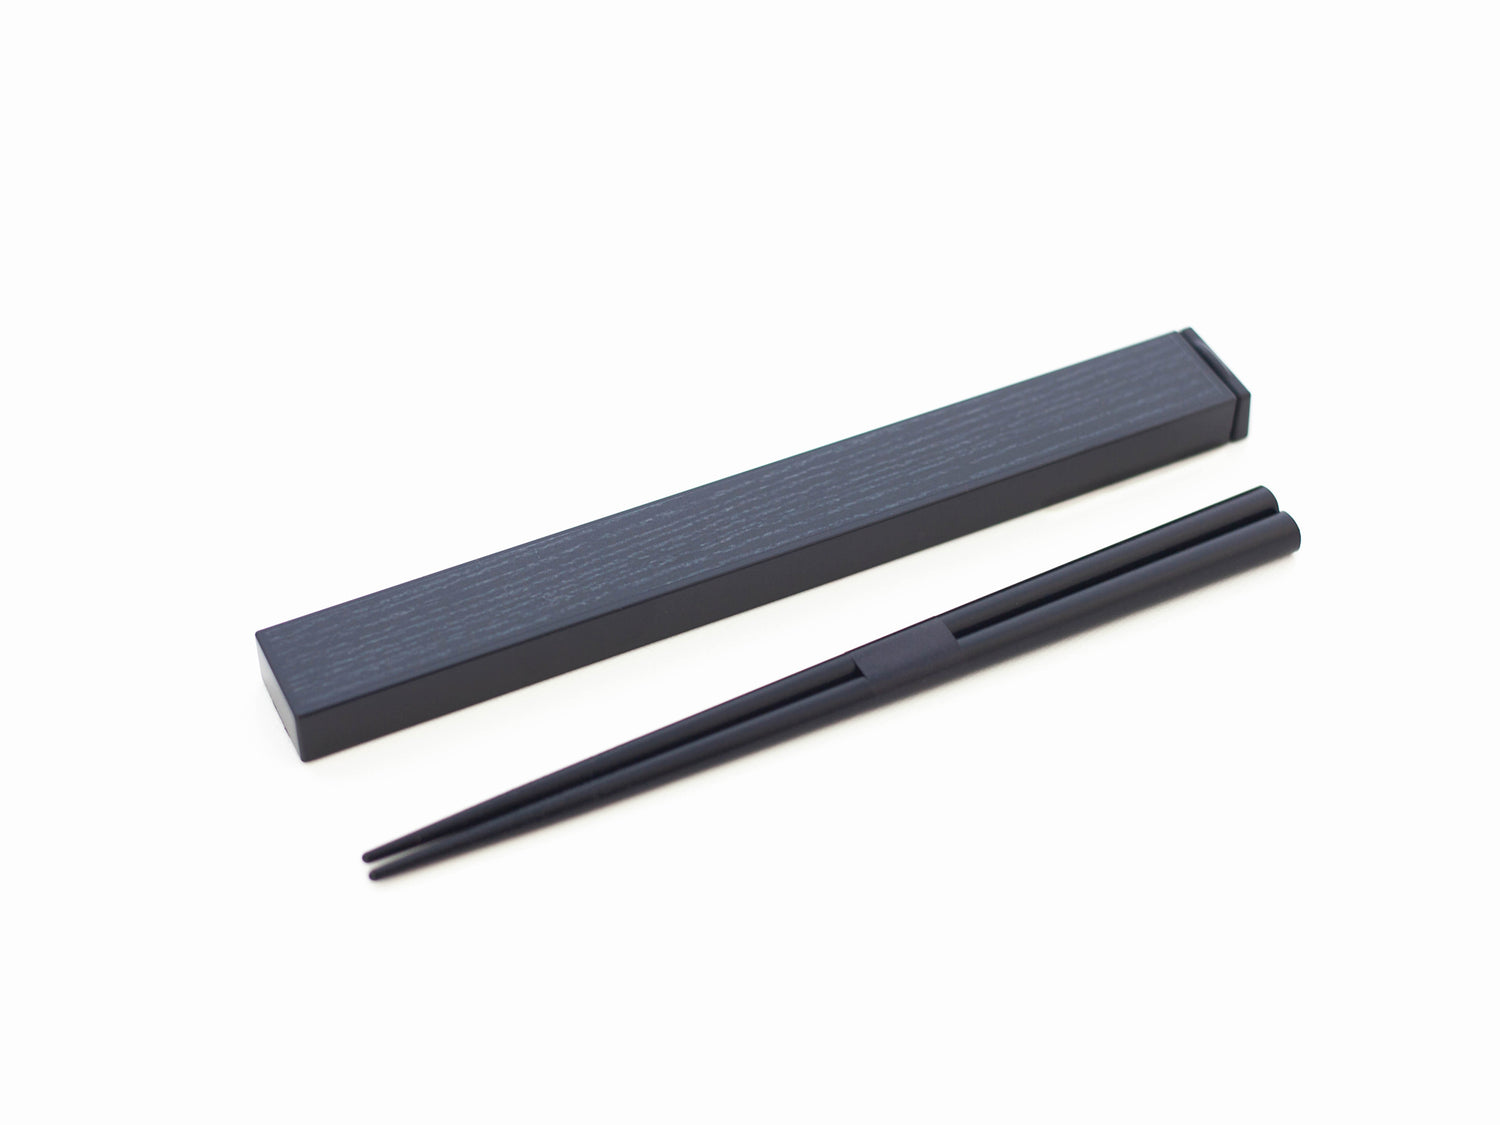 Woodgrain Chopsticks Set 18cm | Black by Hakoya - Bento&co Japanese Bento Lunch Boxes and Kitchenware Specialists